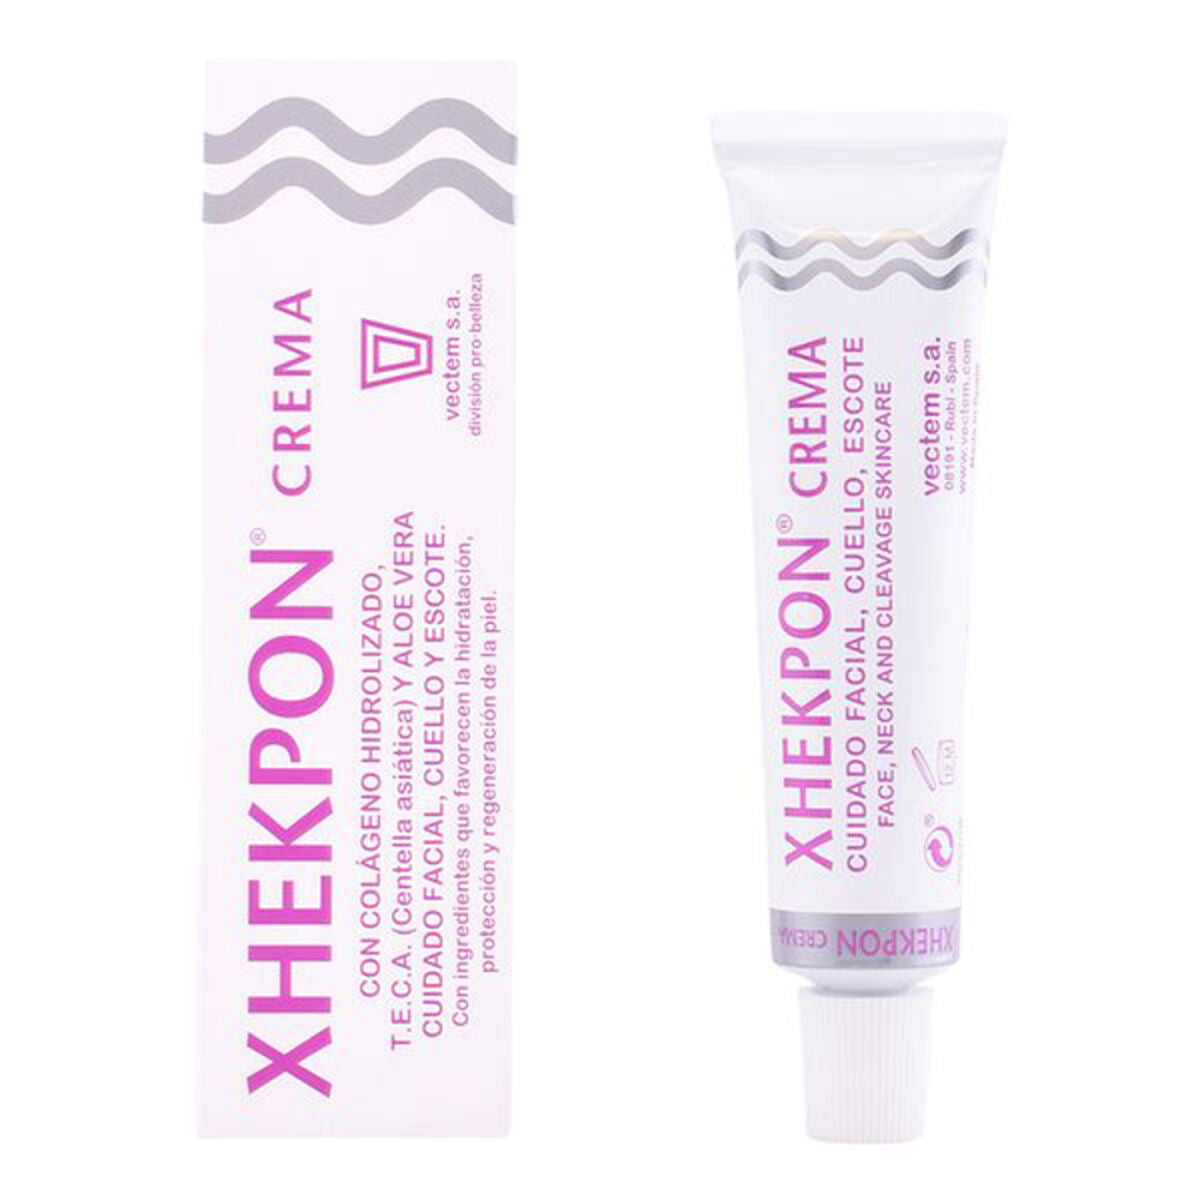 Anti-Aging-Regenerationscreme Xhekpon Xhekpon Cream 40 ml